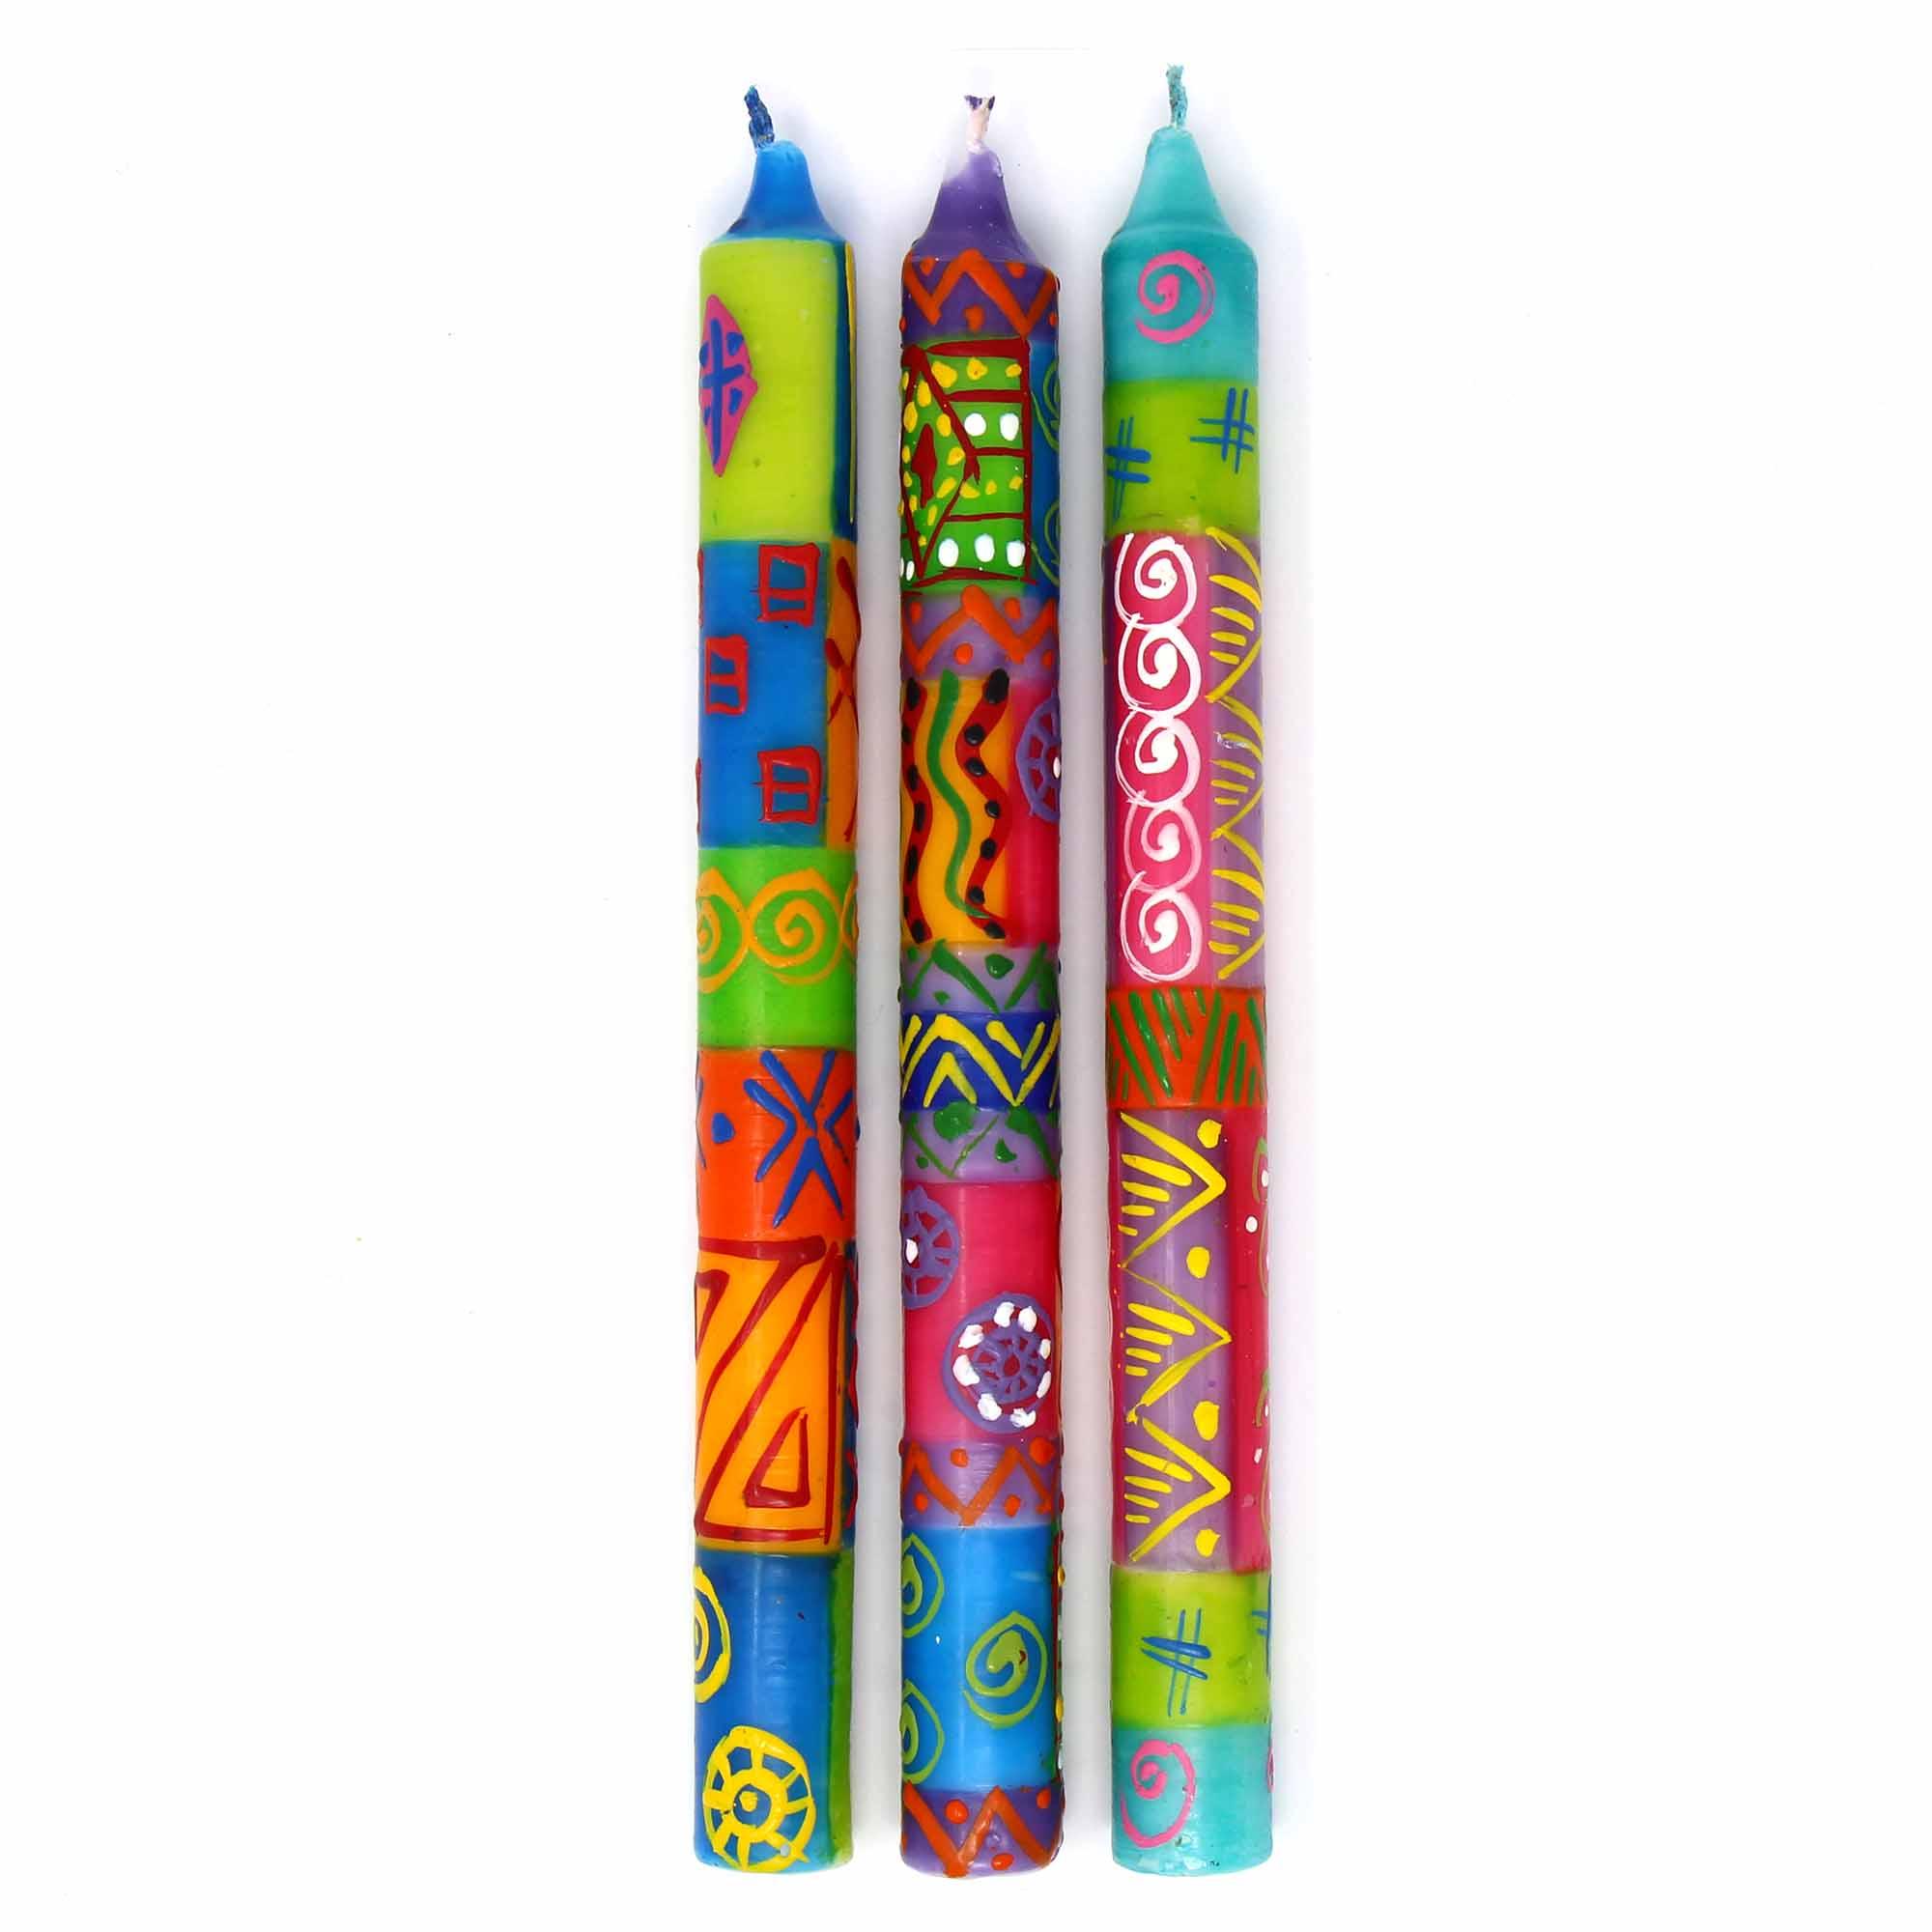 Tall Hand Painted Candles - Three in Box - Shahida Design - Flyclothing LLC